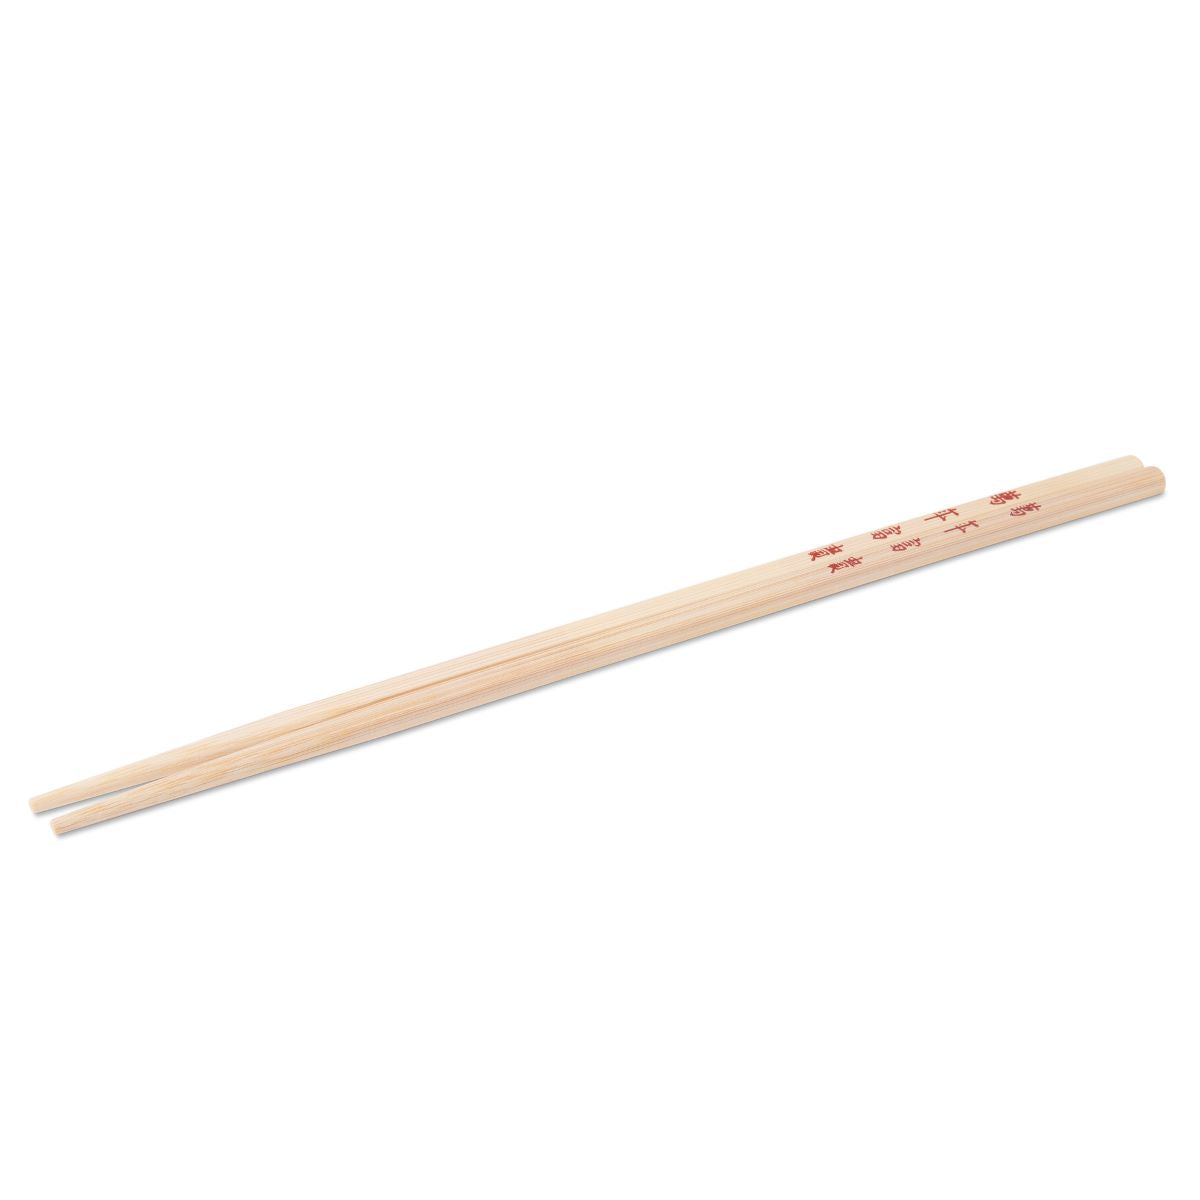 Bamboo Chopsticks Pack of 4 Pairs